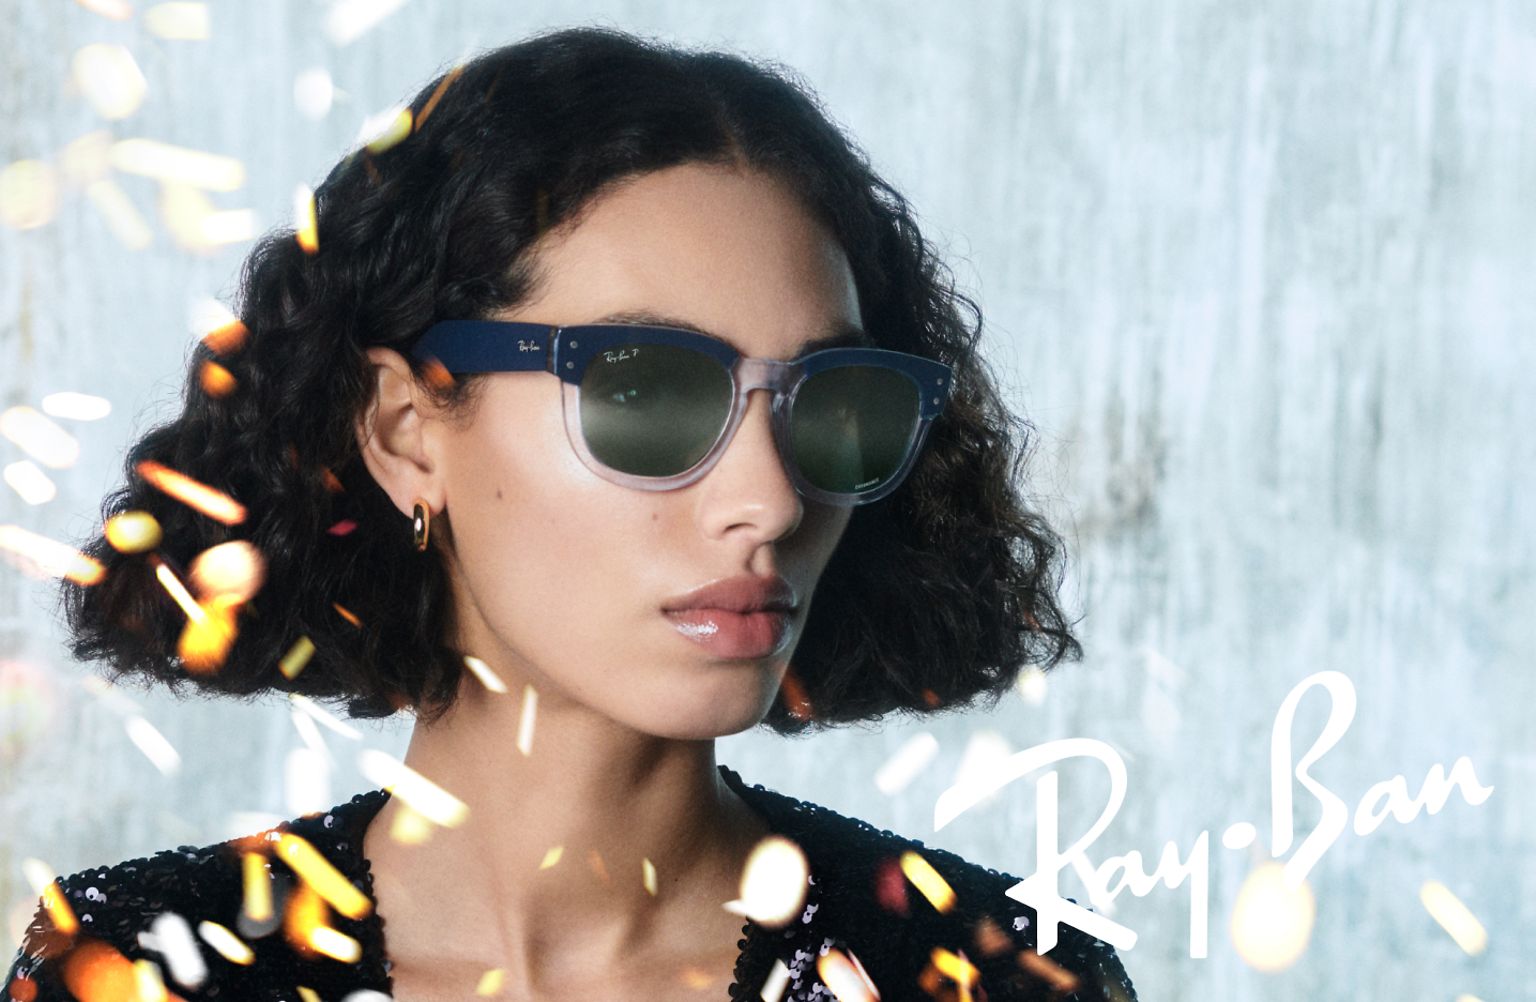 Ray-Ban Sunglasses - Buy Eyewear Online